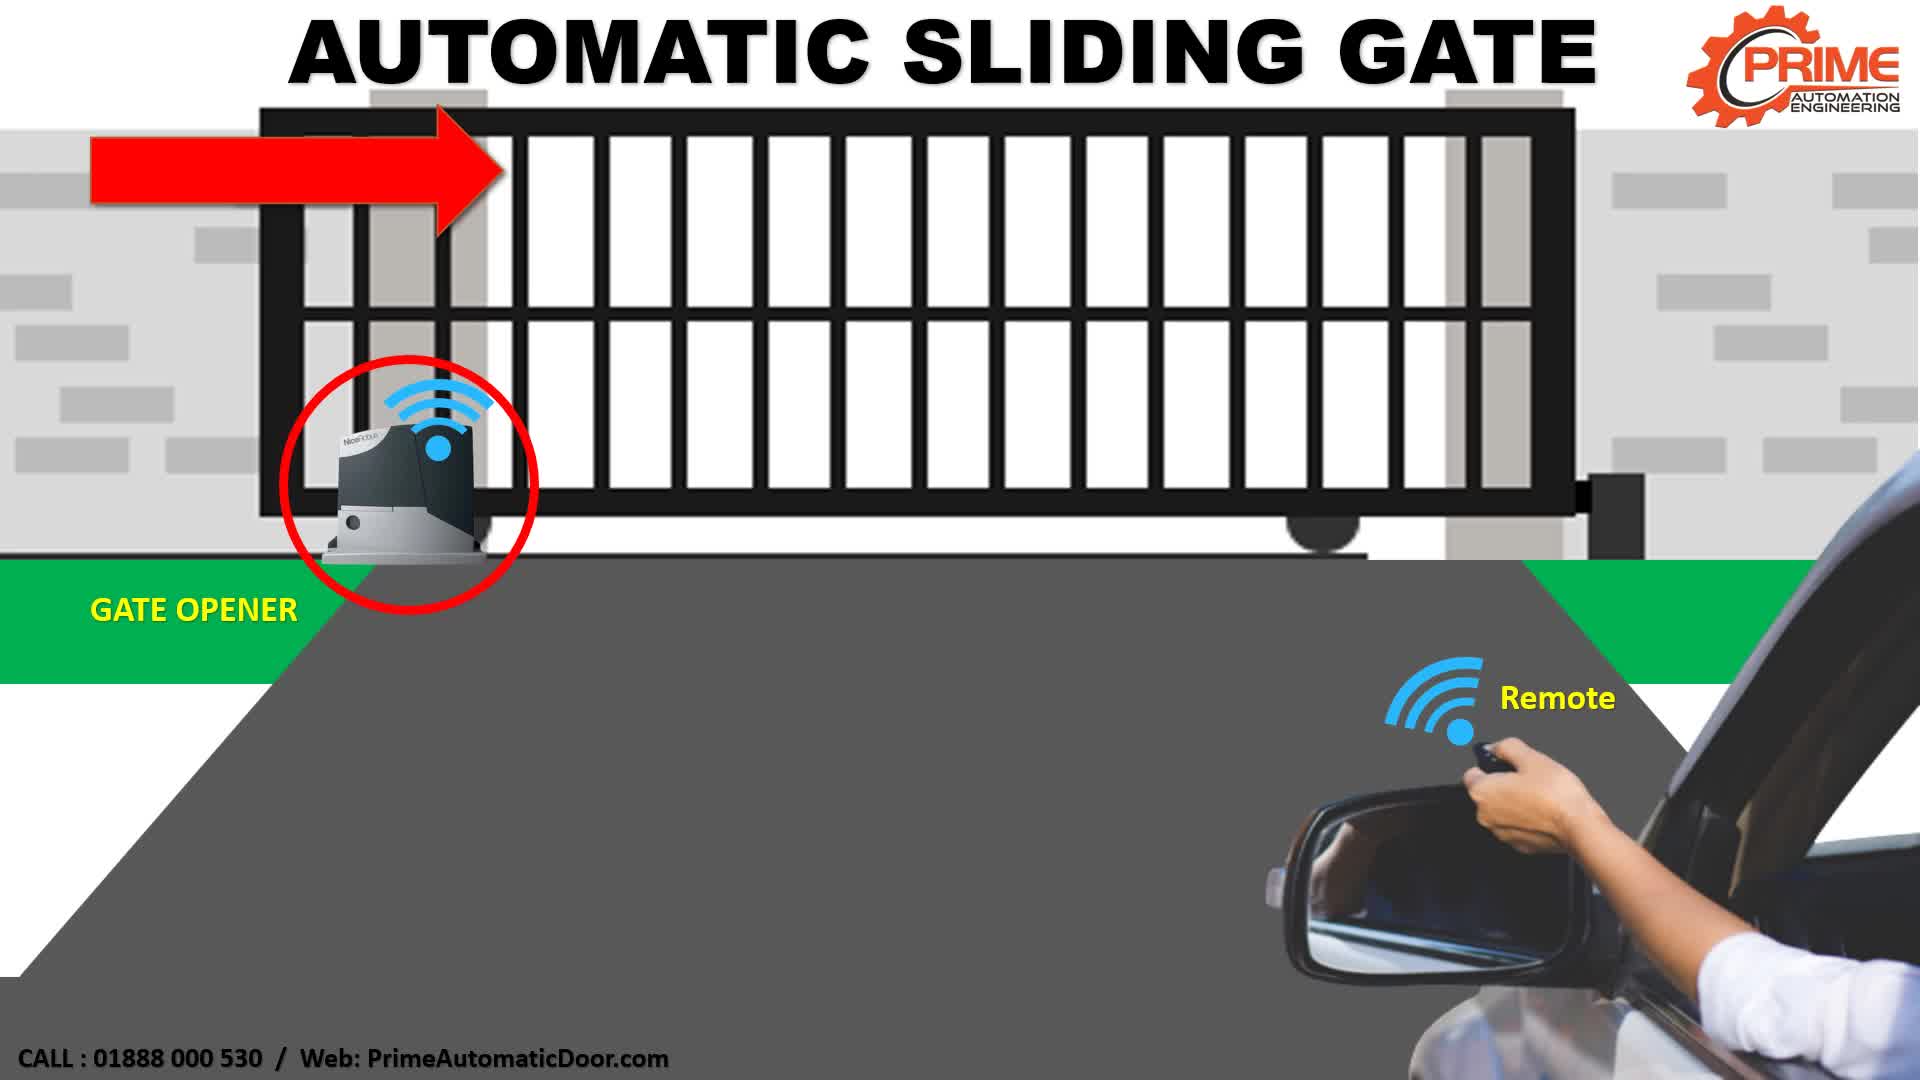 Automatic gate Automatic Sliding gate Automatic Sliding Gate opener Automatic Renote Control Gate Automatic Swing gate System Automatic gate Price in bangladesh